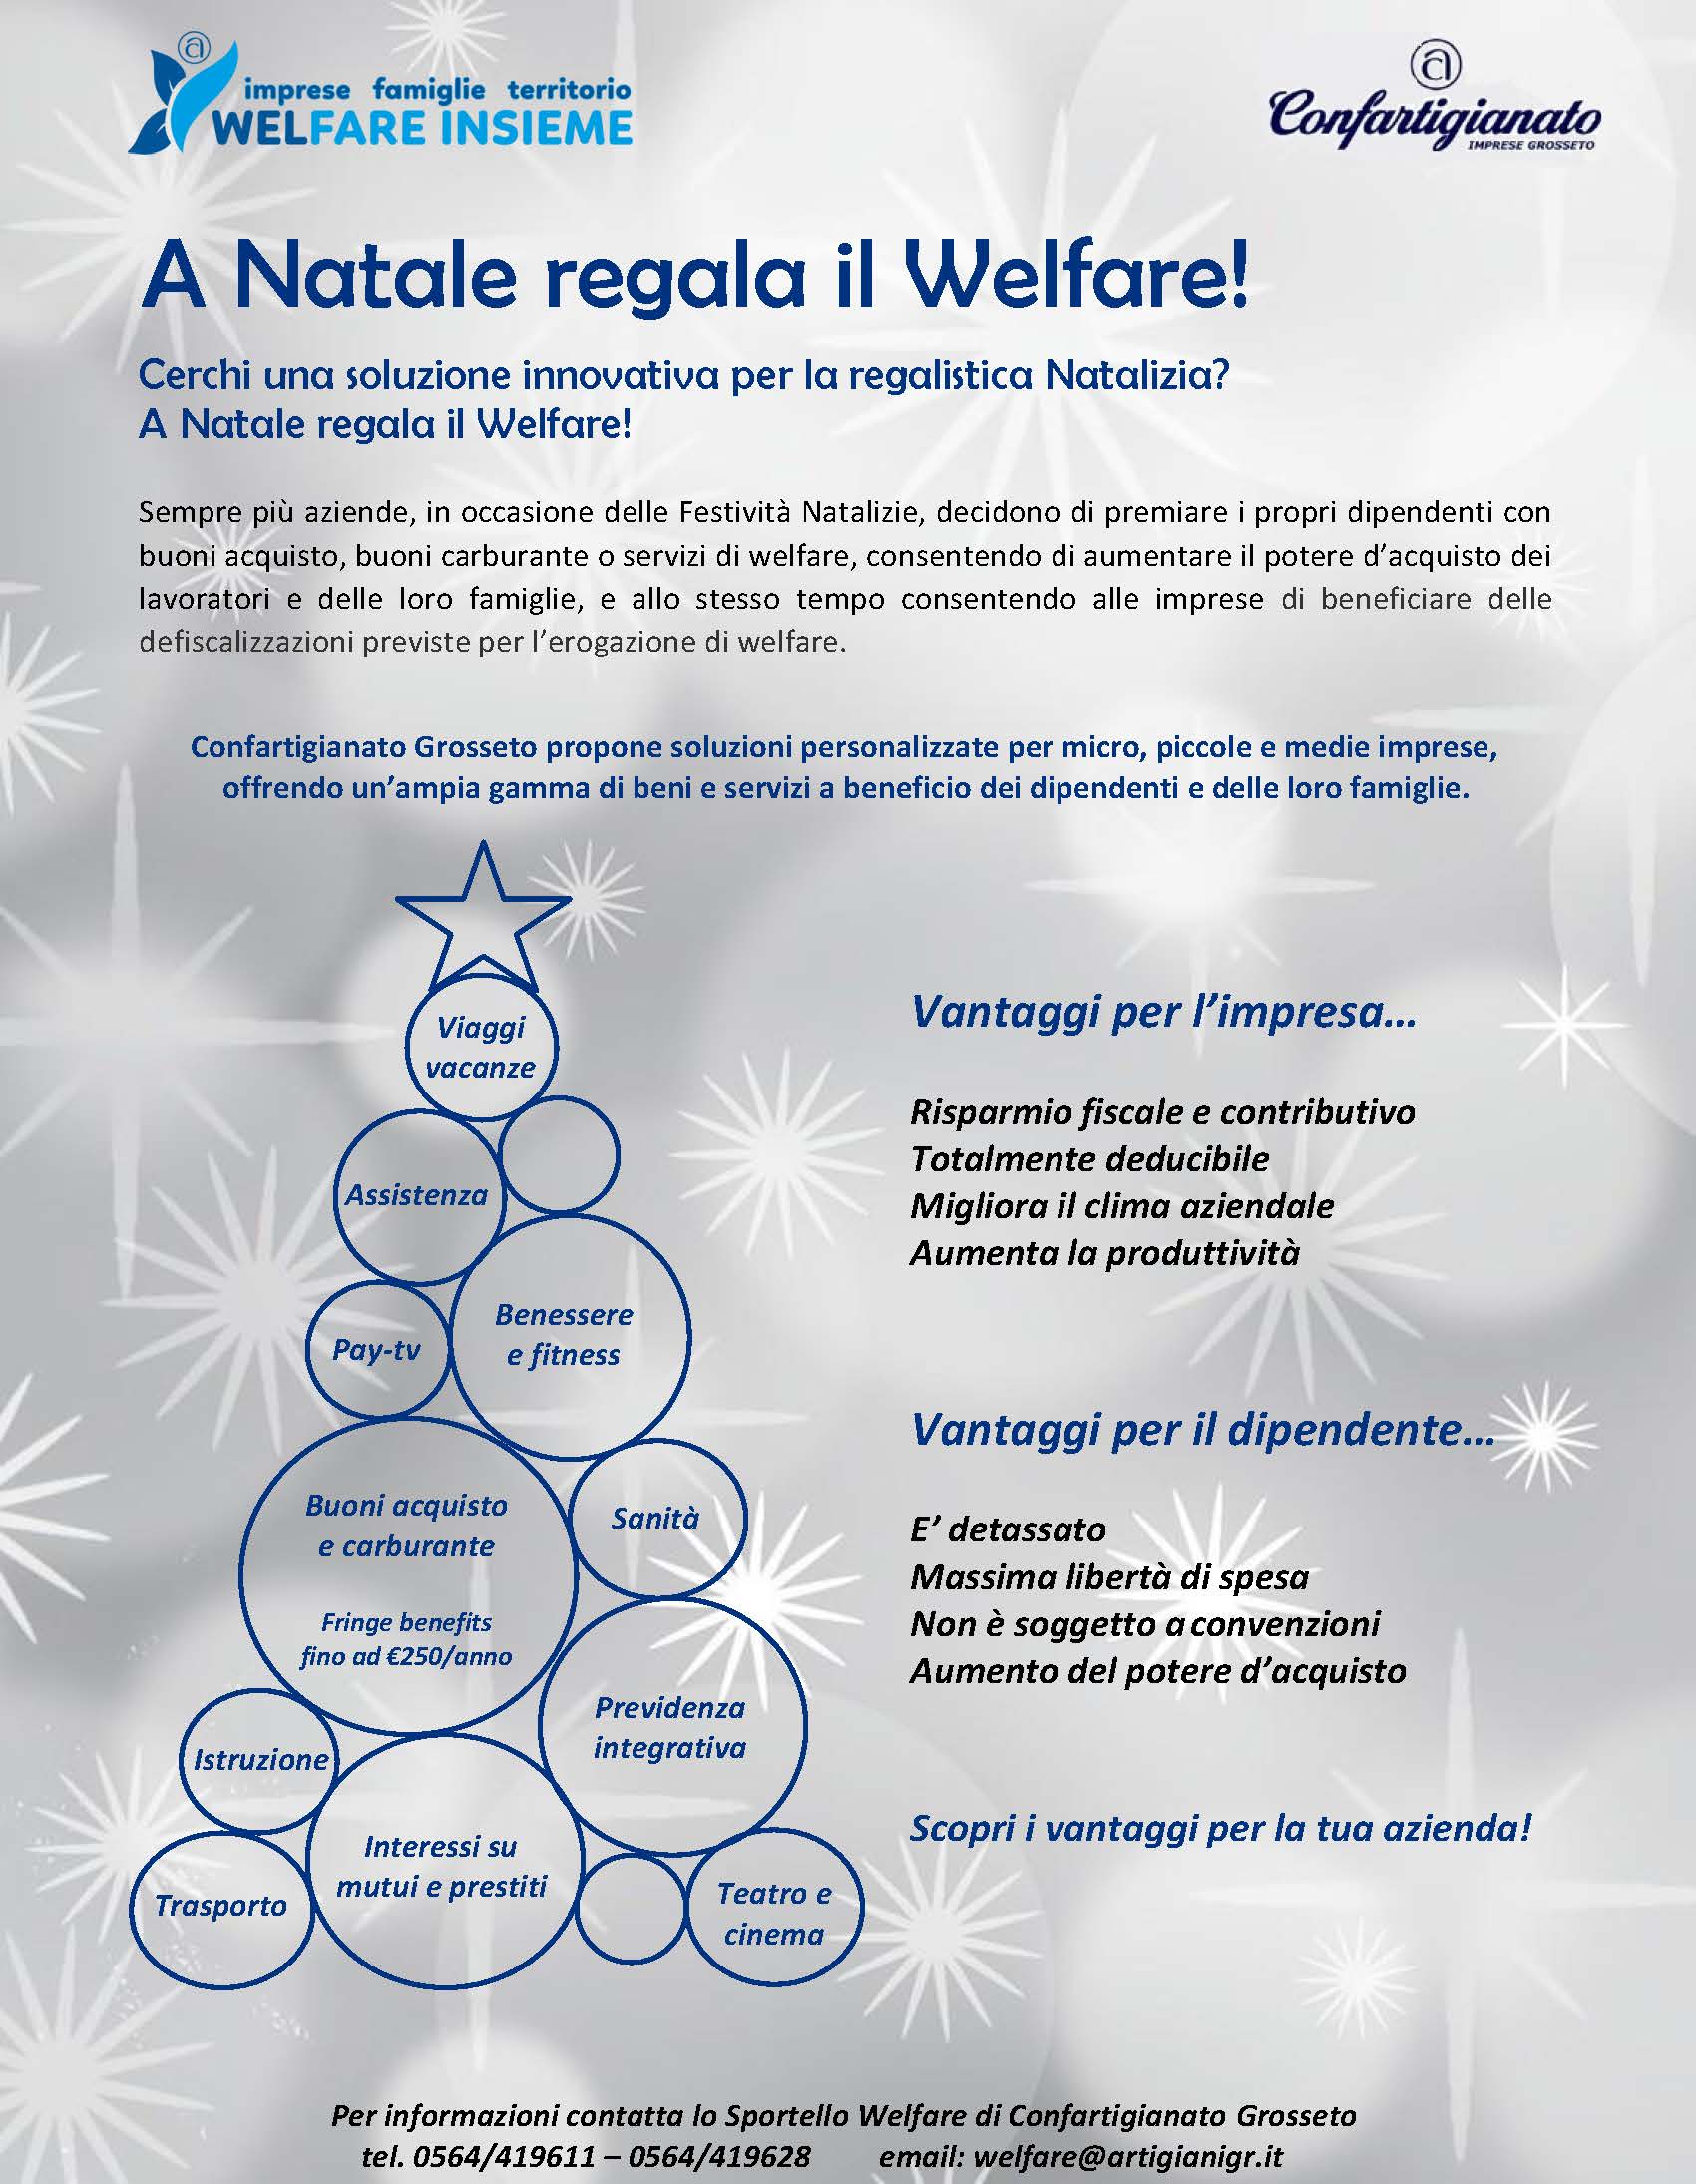 Volantino_Welfare_aziendale.jpg